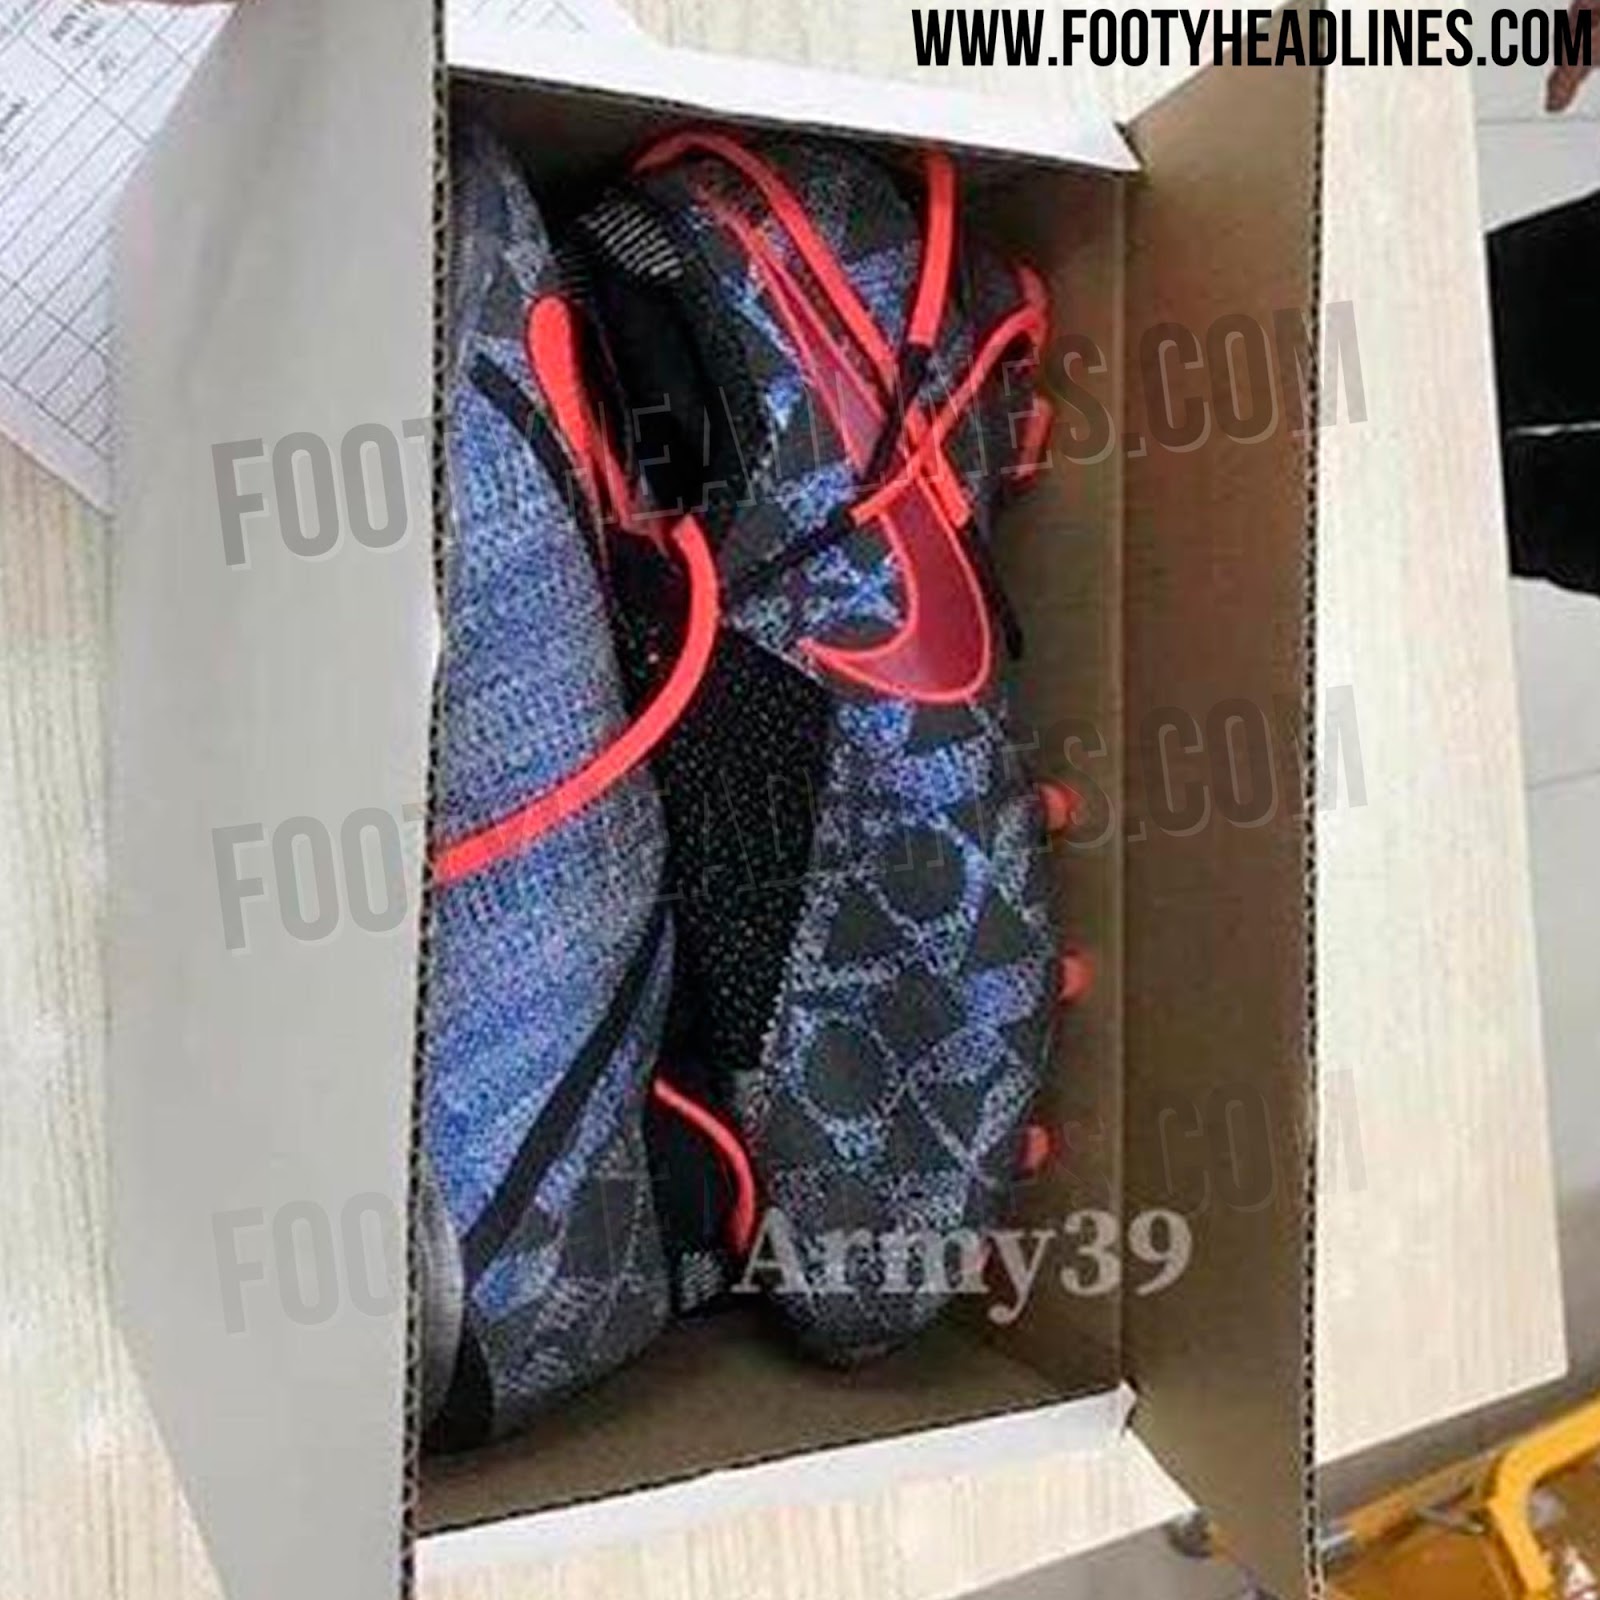 3 Unreleased Nike Phantom VSN 2018-19 Boots Leaked - Footy Headlines